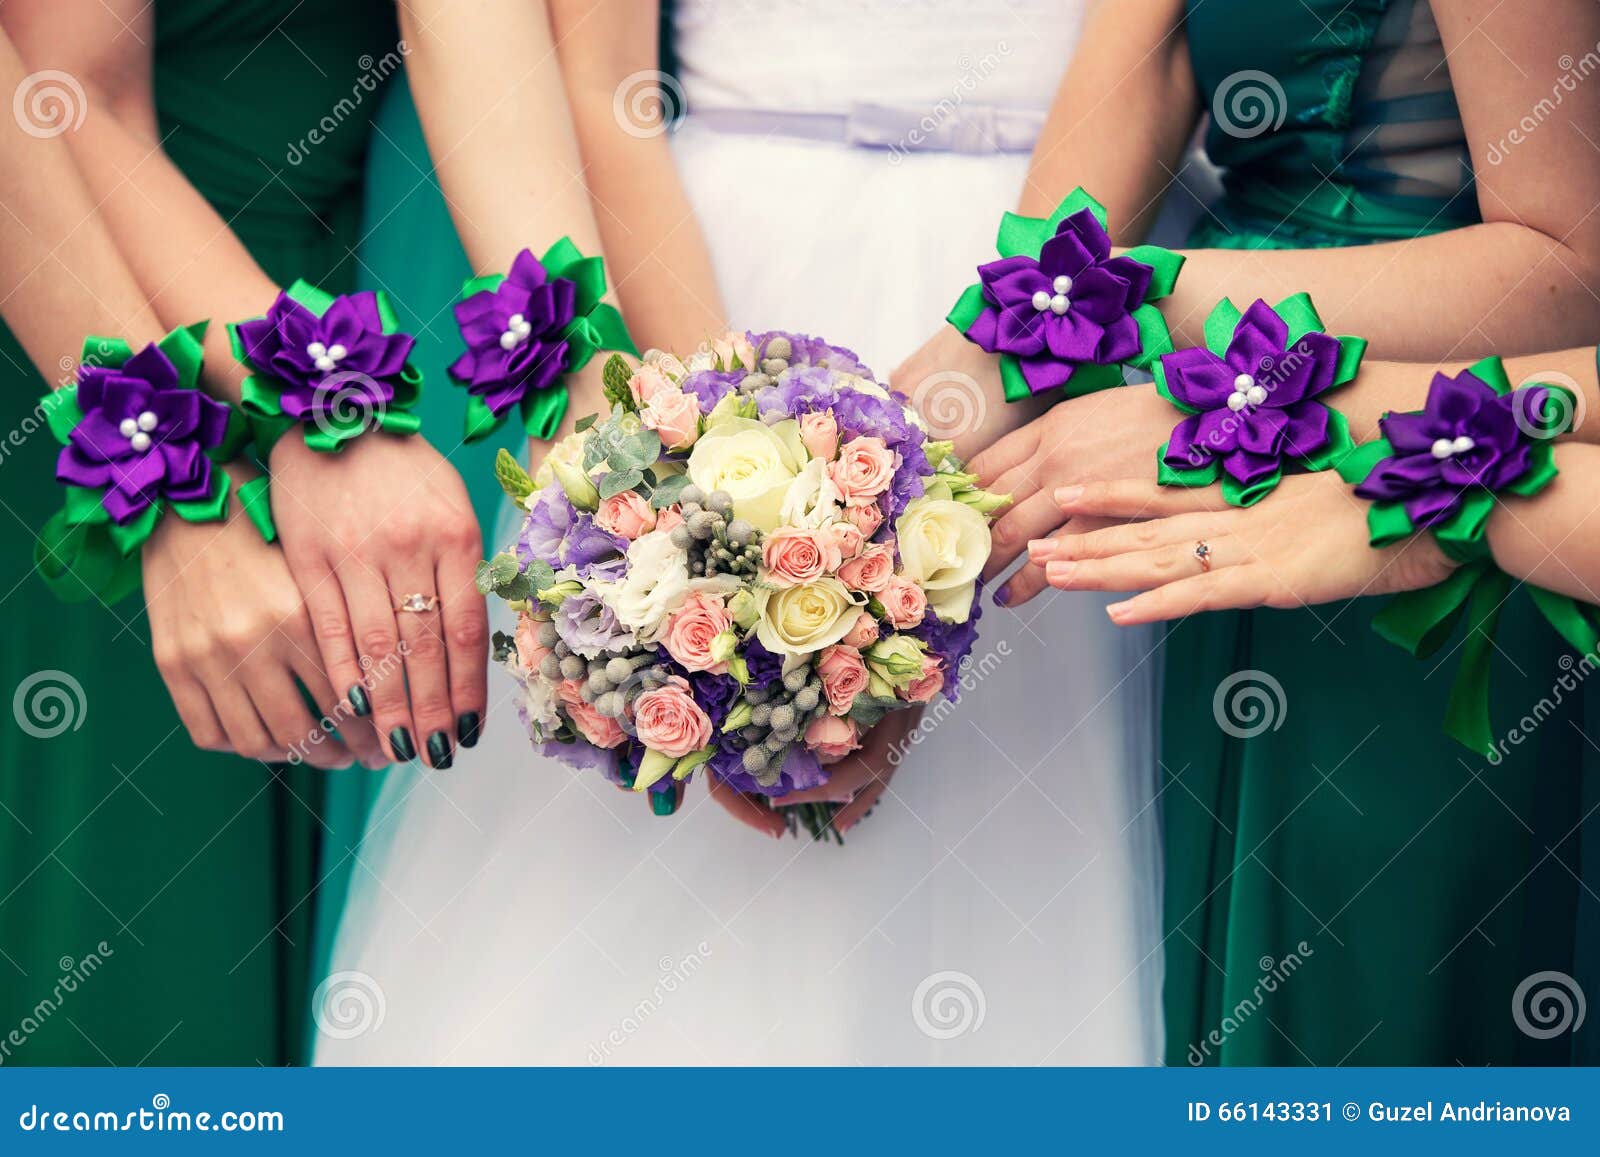 Amazon.com: YSUCAU Wrist Corsage Bracelets with Ribbon Wristband Green Bridal  Bridesmaid Wrist Corsage Hand Flower for Wedding Porm Party Decor Set of 2  : Home & Kitchen